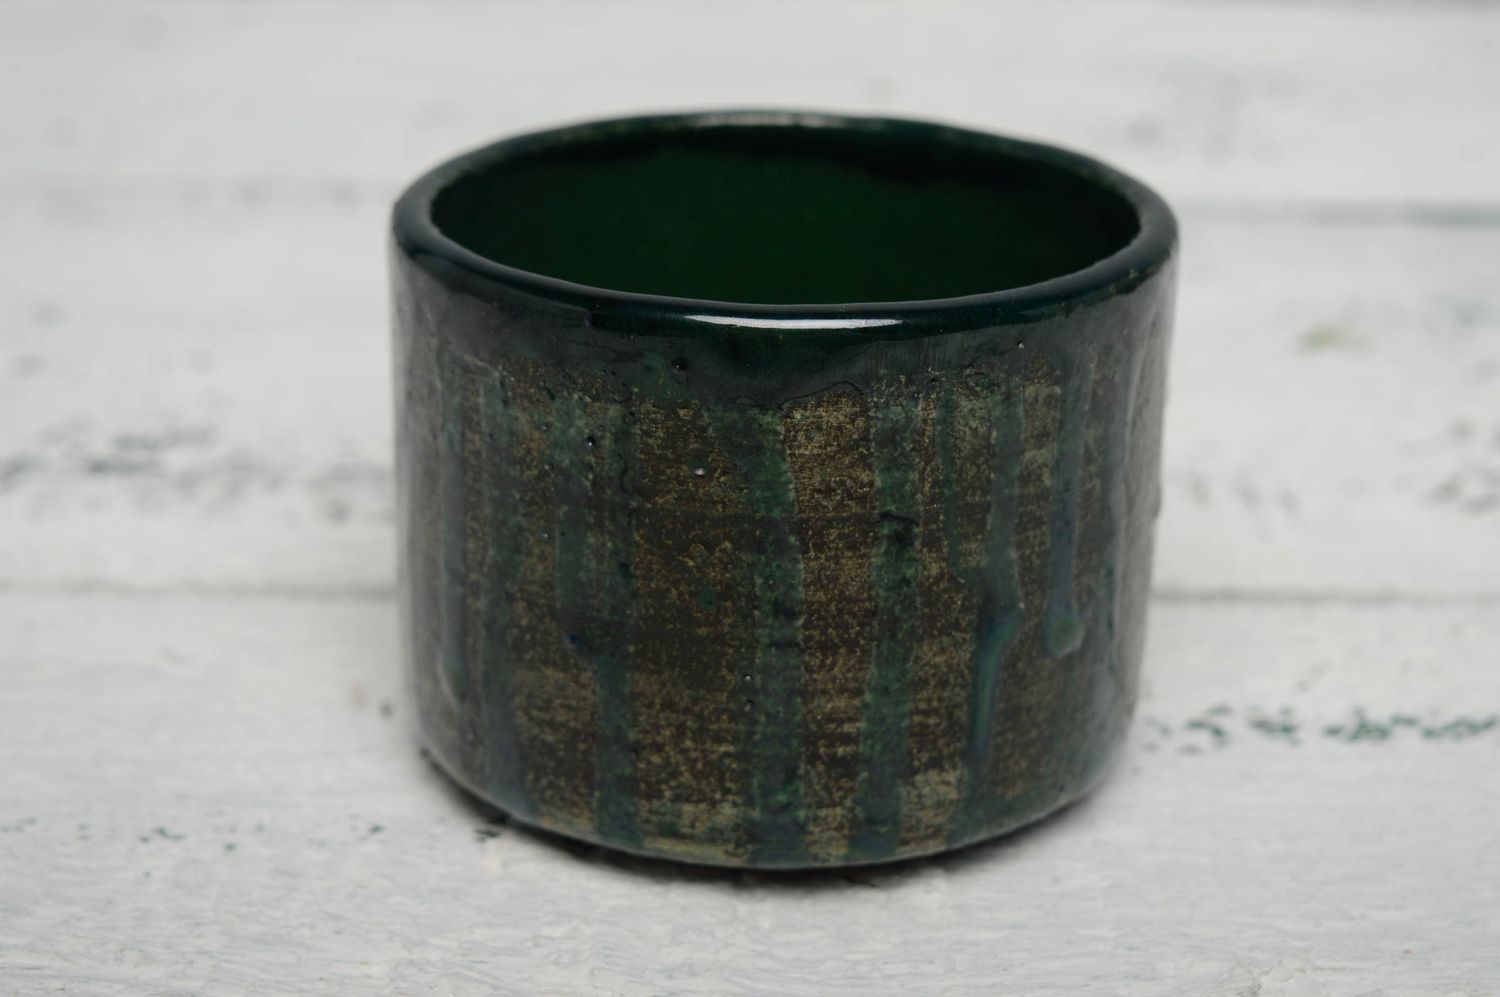 9 oz ceramic coffee cup glazed with no handle in dark green color 0,52 lb photo 1